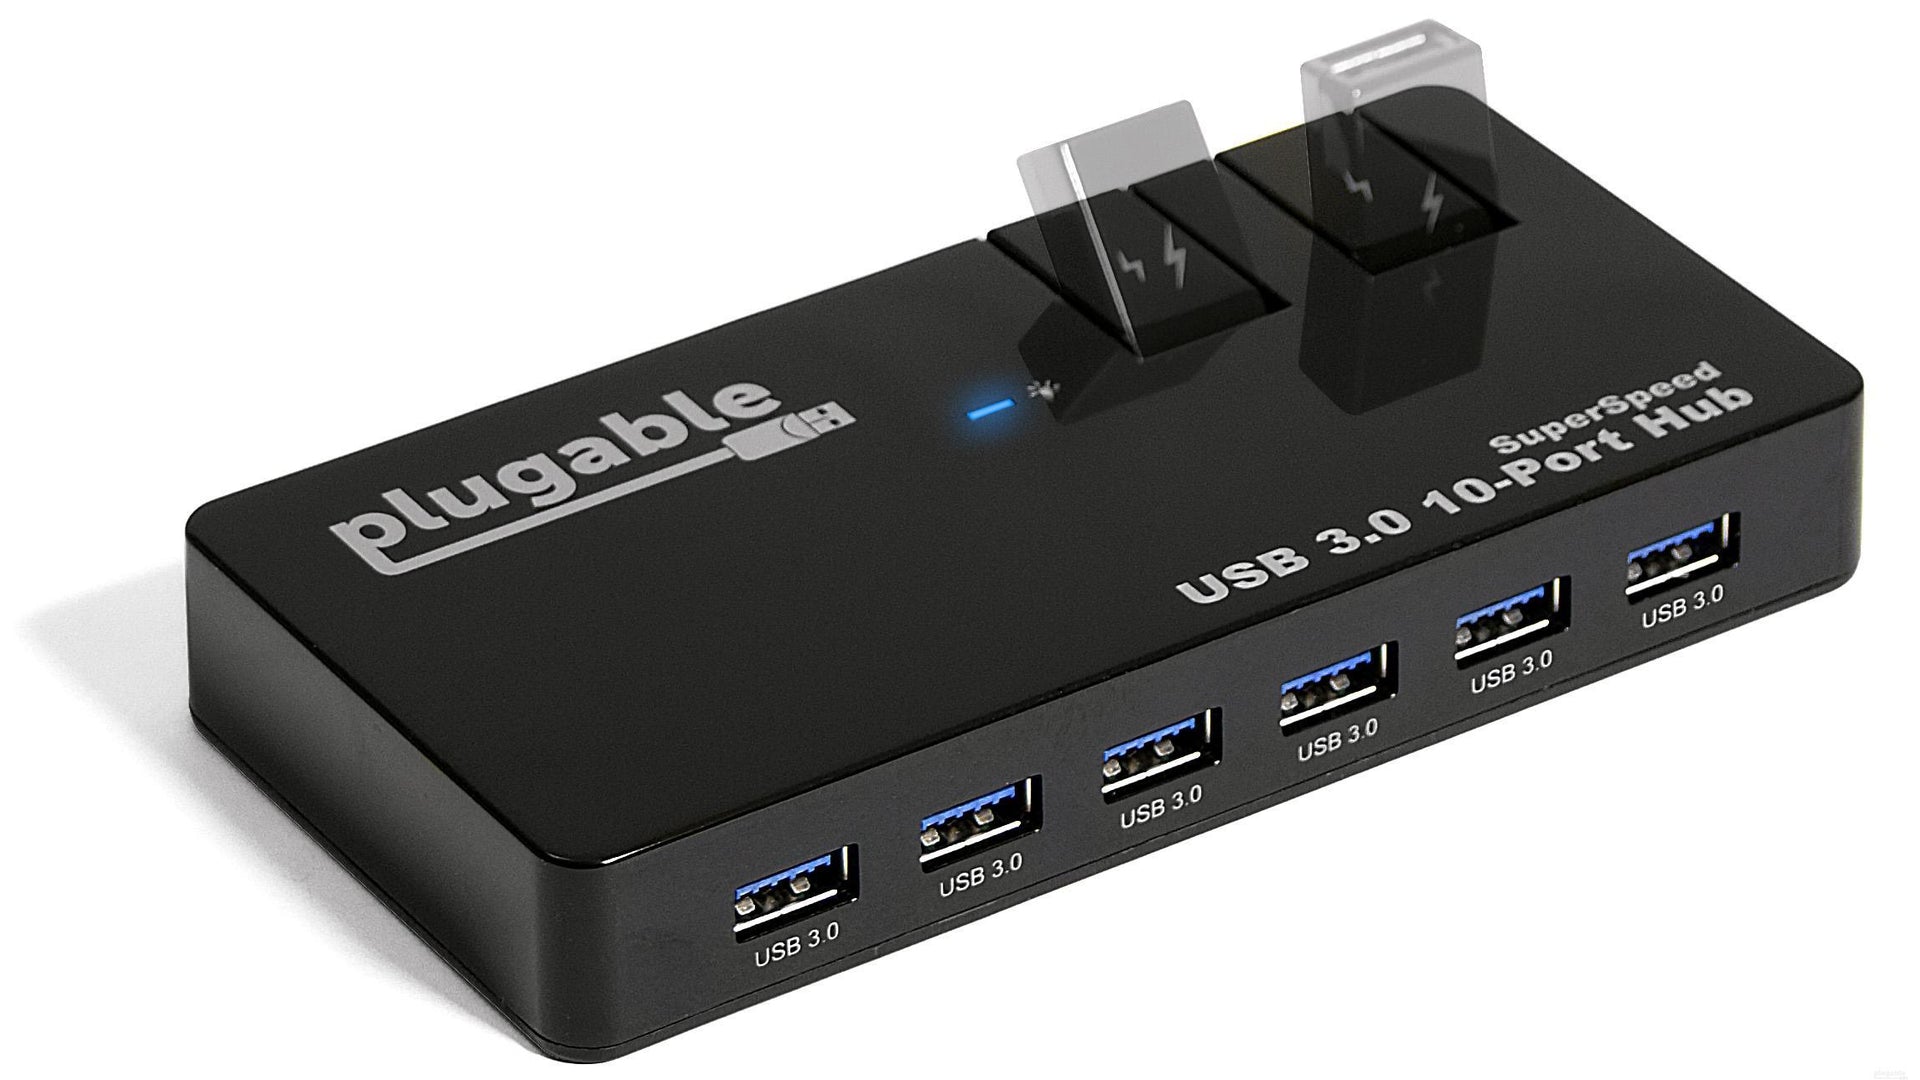 Concentrateur USB 3.0 10 Ports, Plug and Play Concentrateur USB